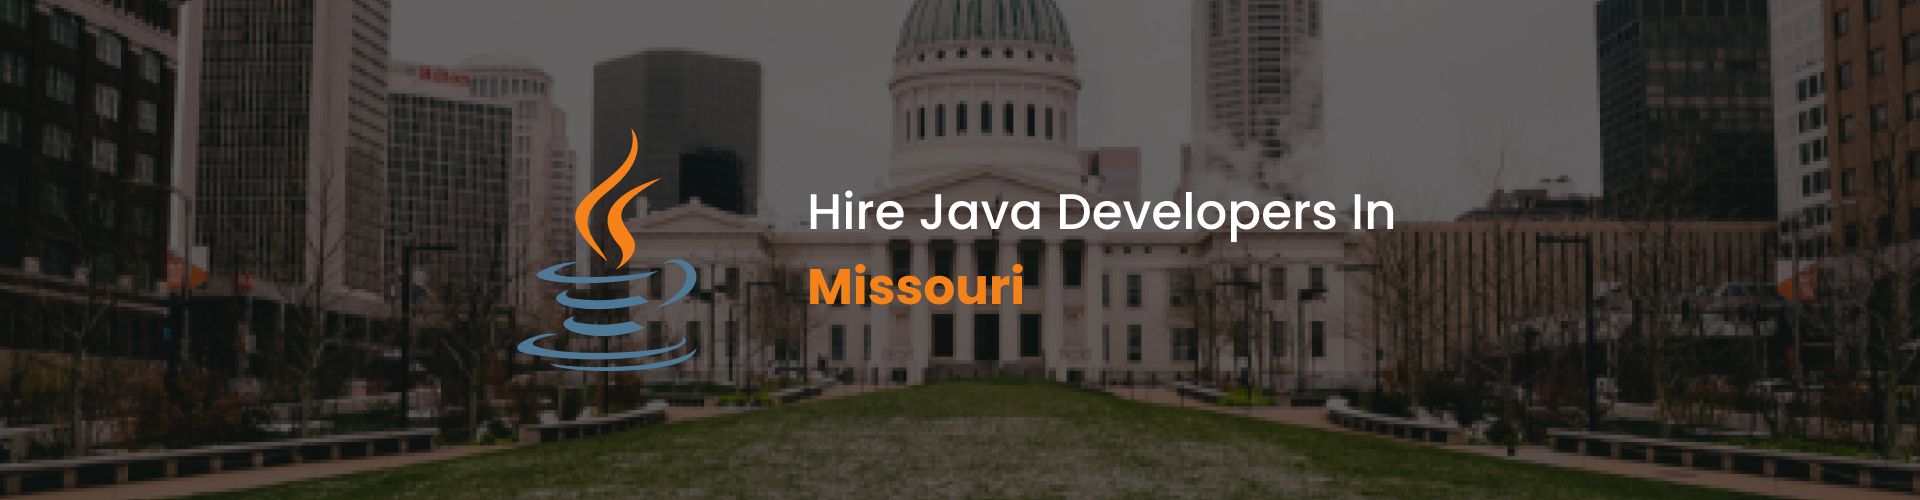 hire java developers in missouri